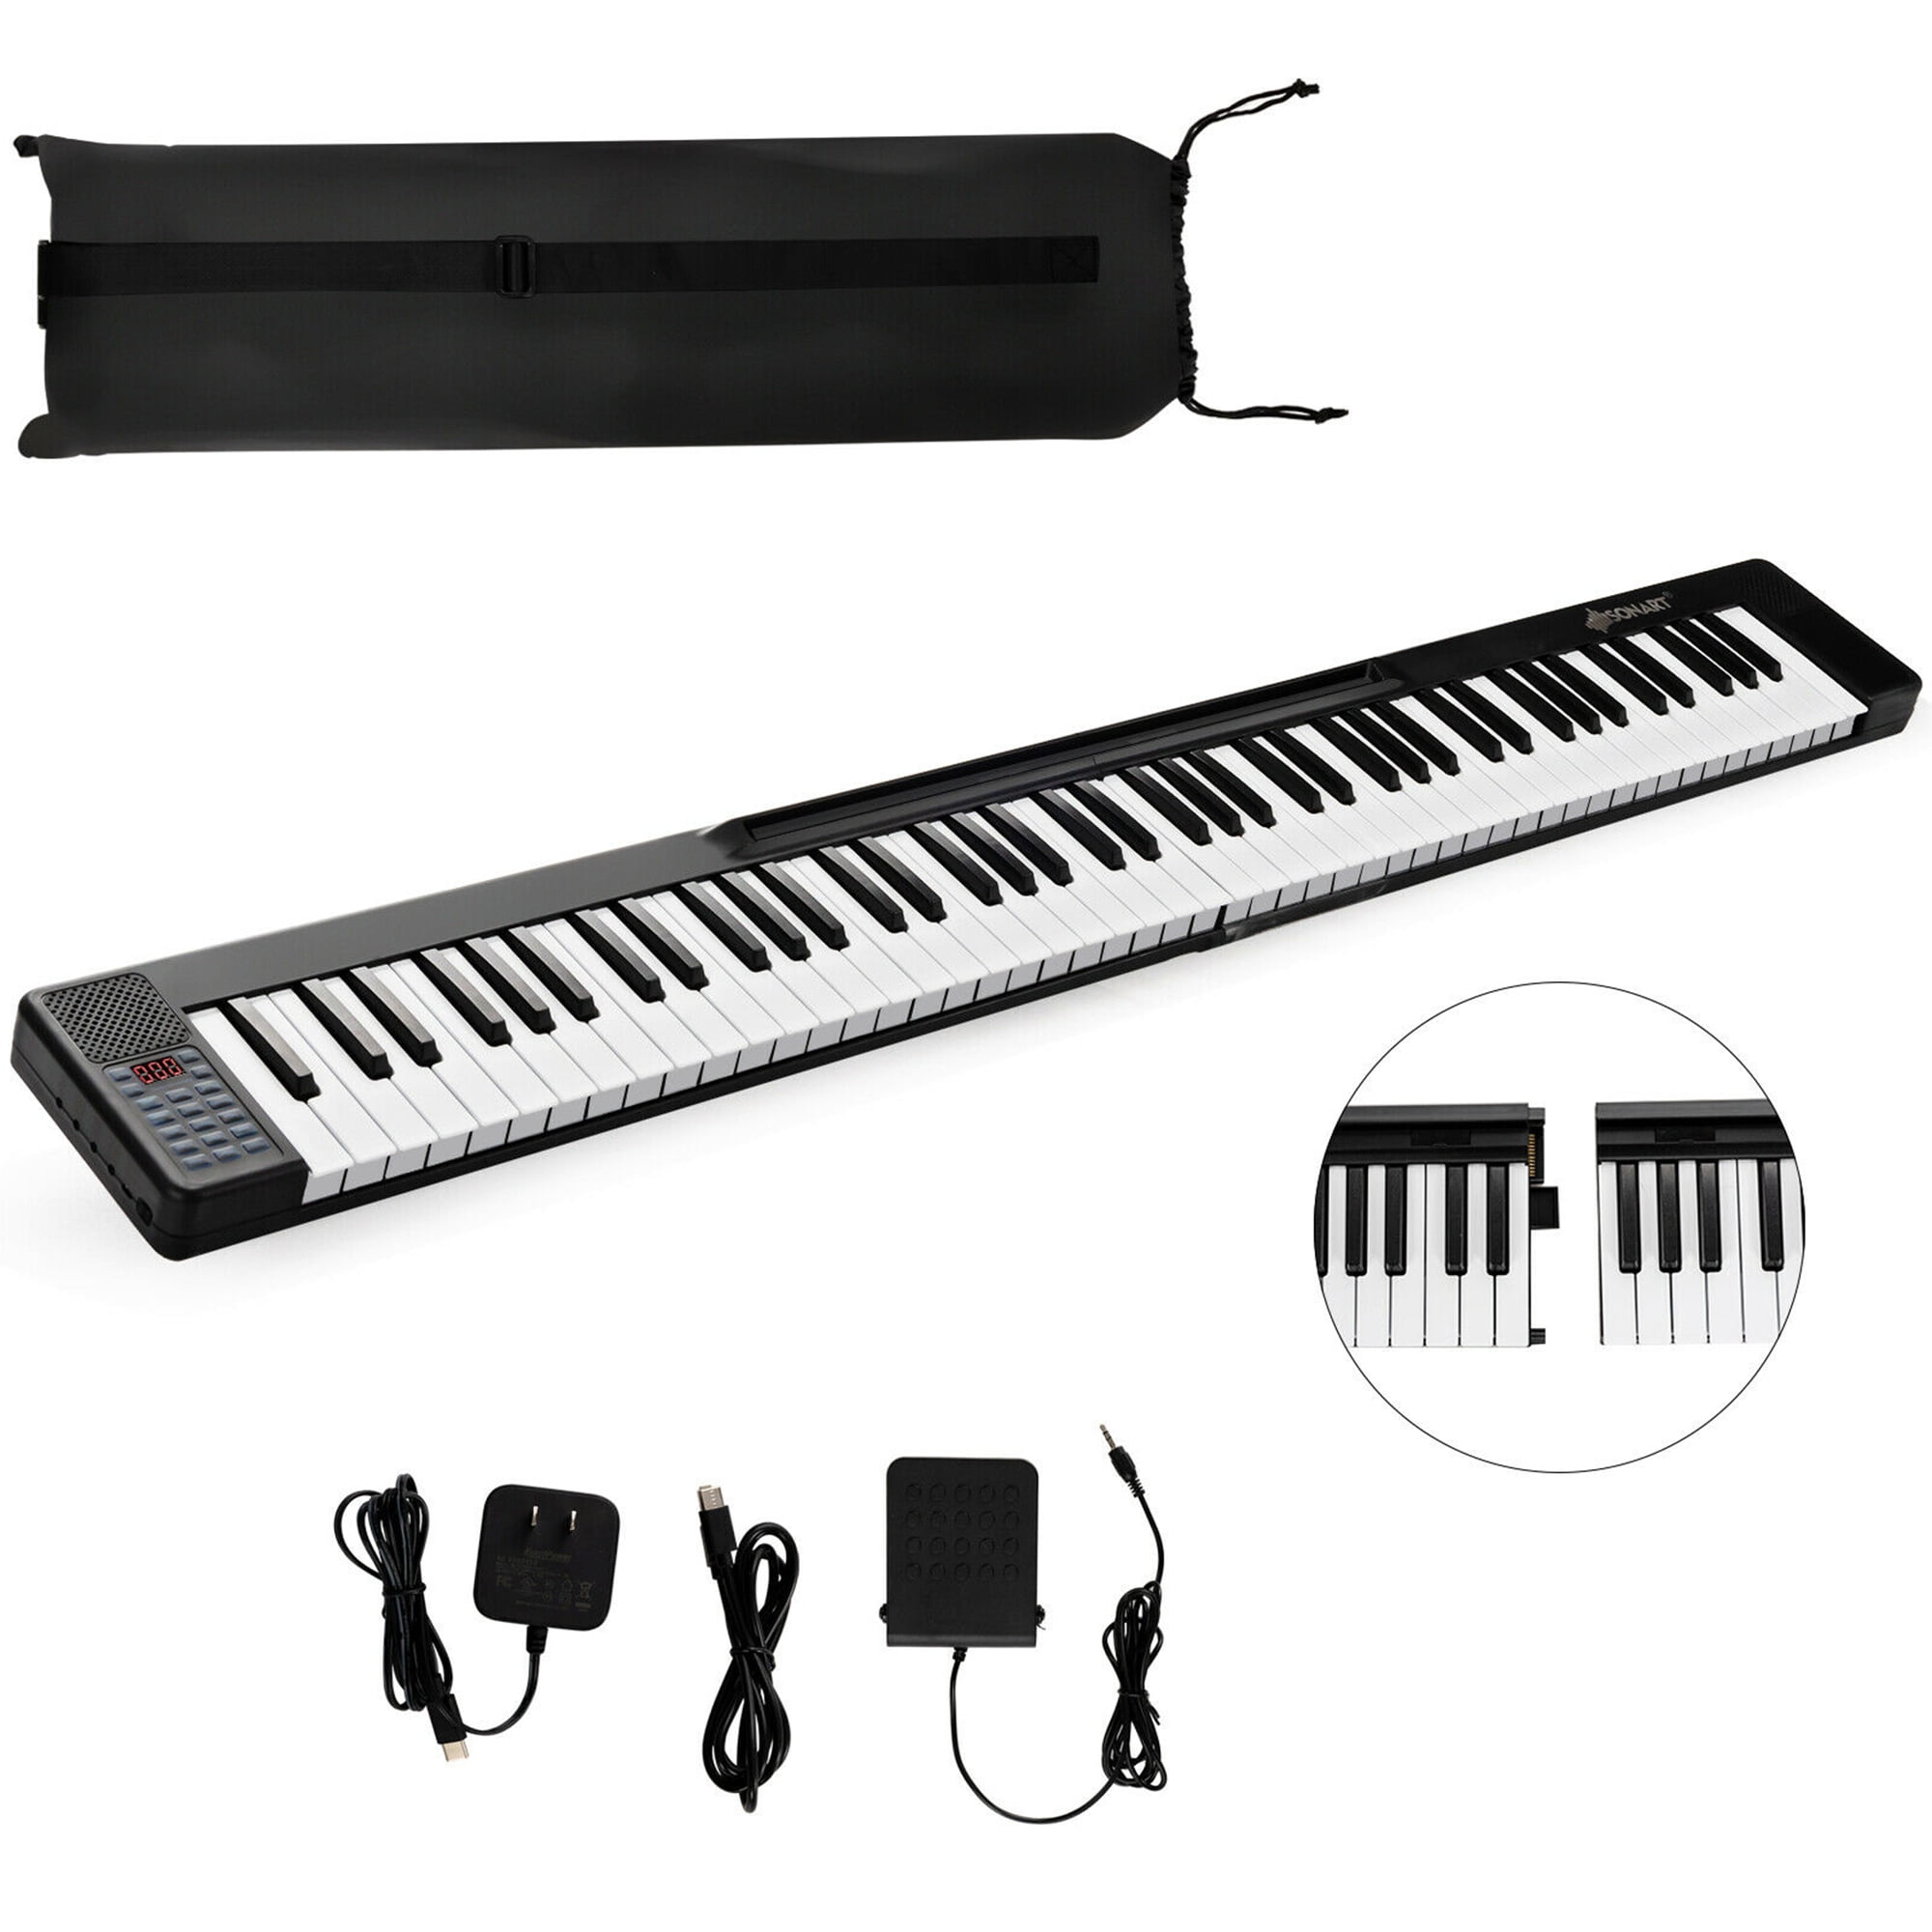 New 88 Keys Portable Midi Digital Electronic Piano Musical